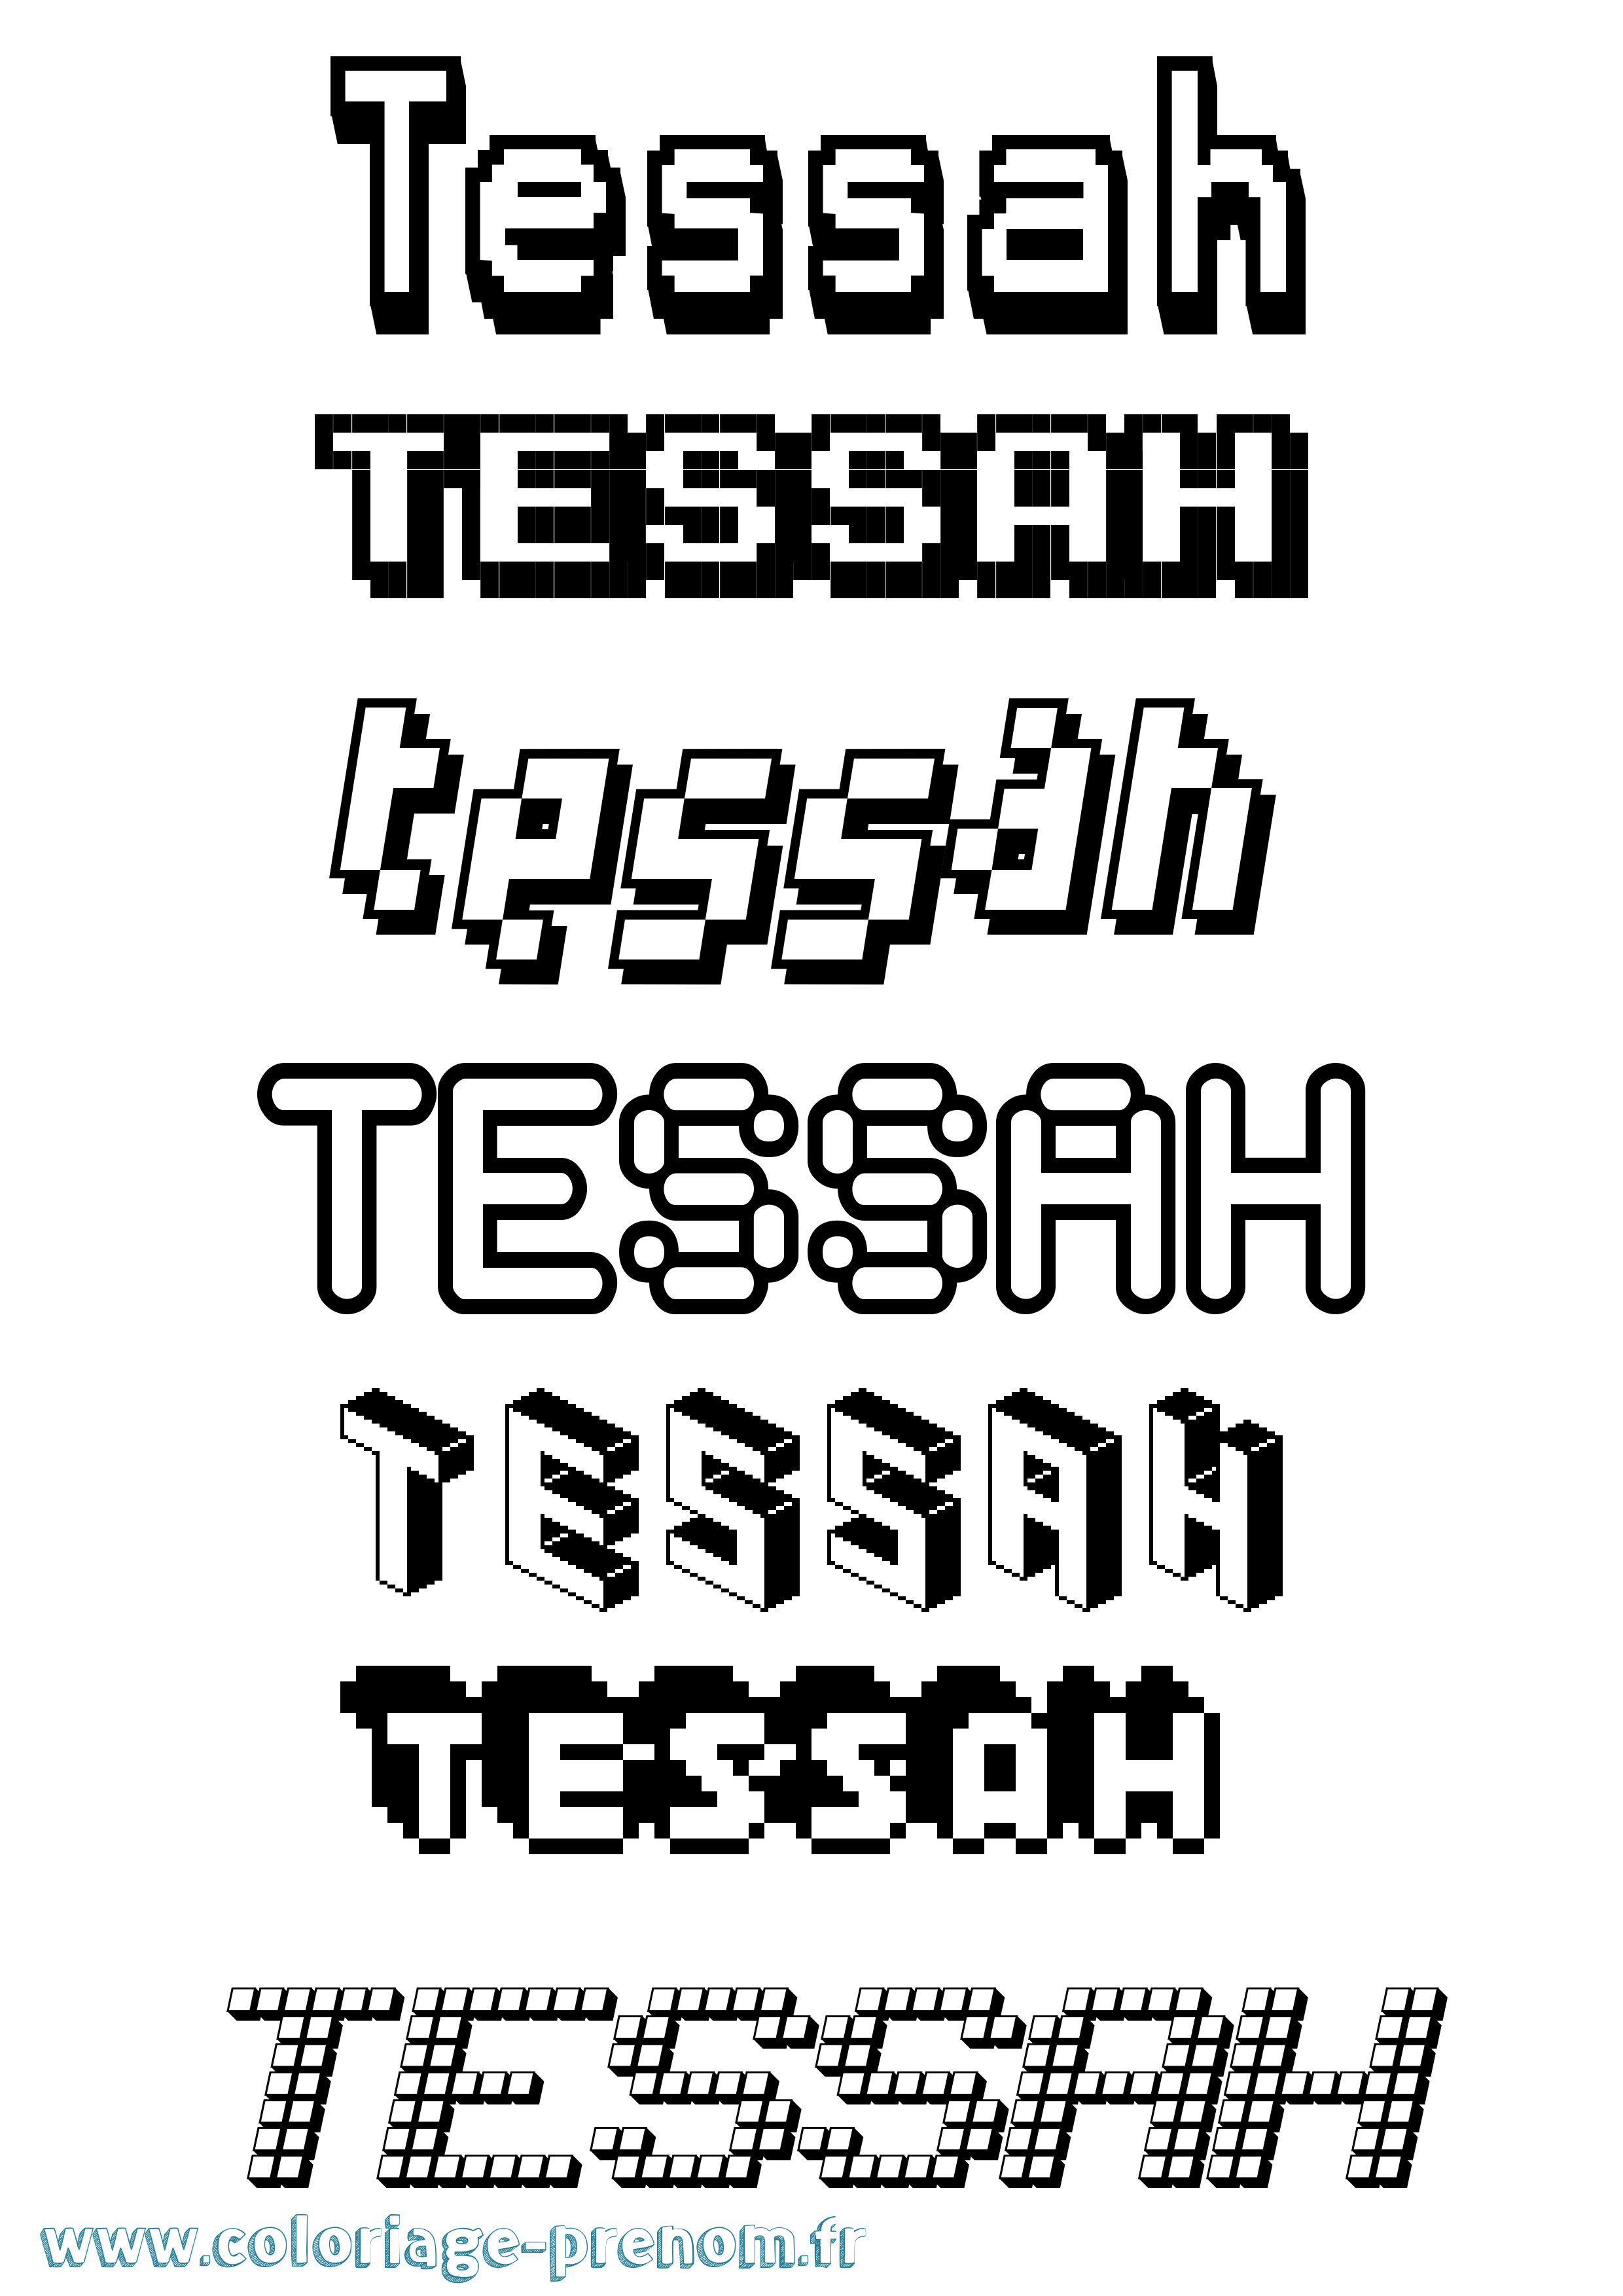 Coloriage prénom Tessah Pixel